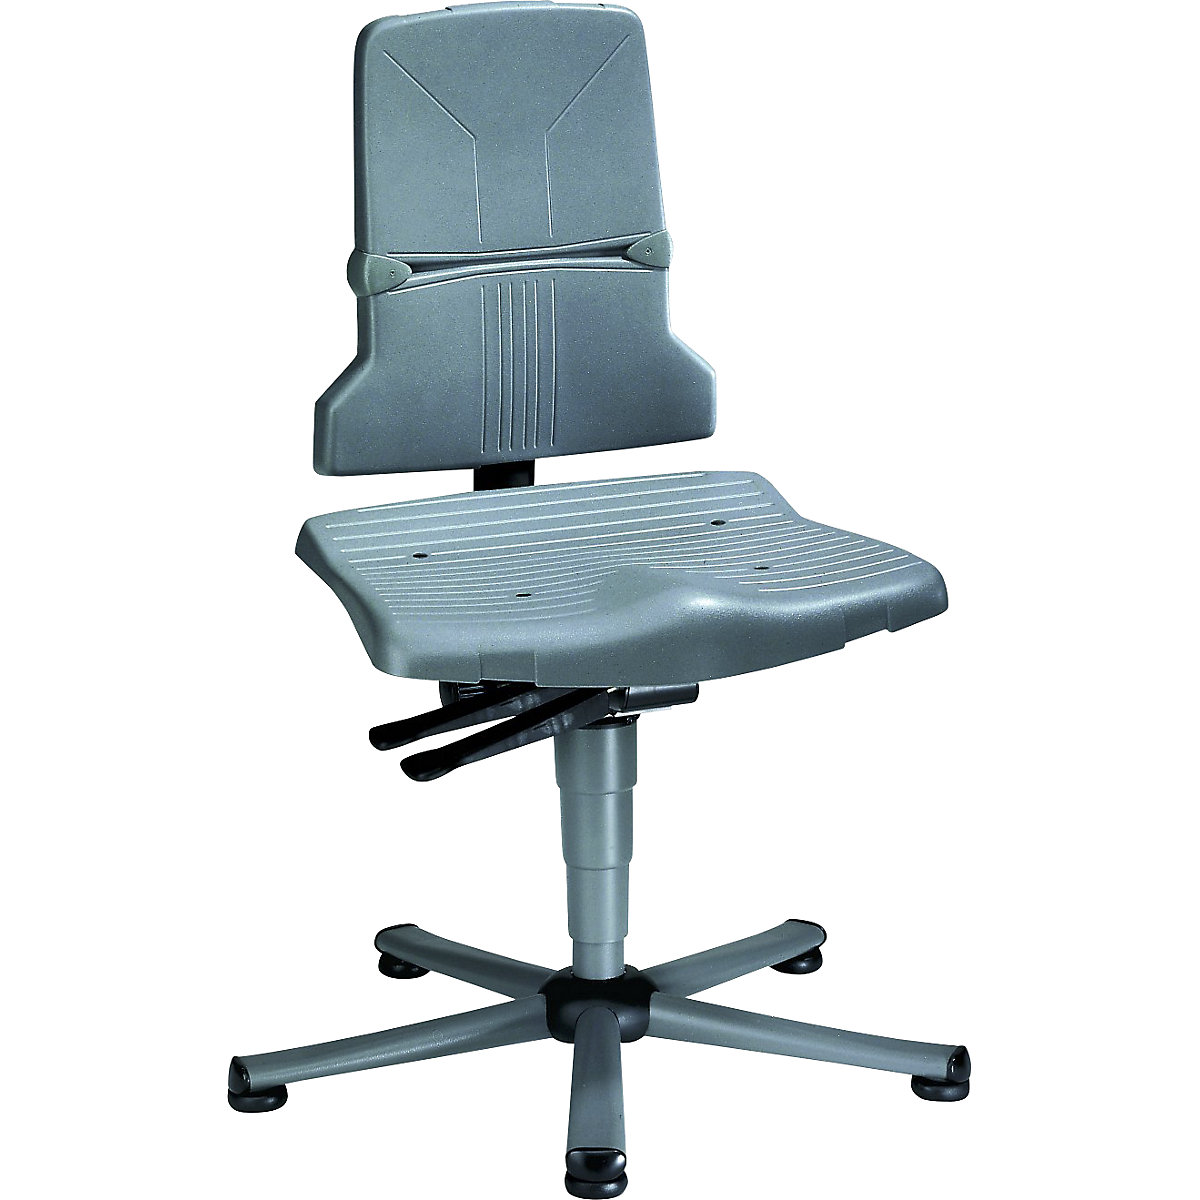 Pracovní otočná židle SINTEC - bimos